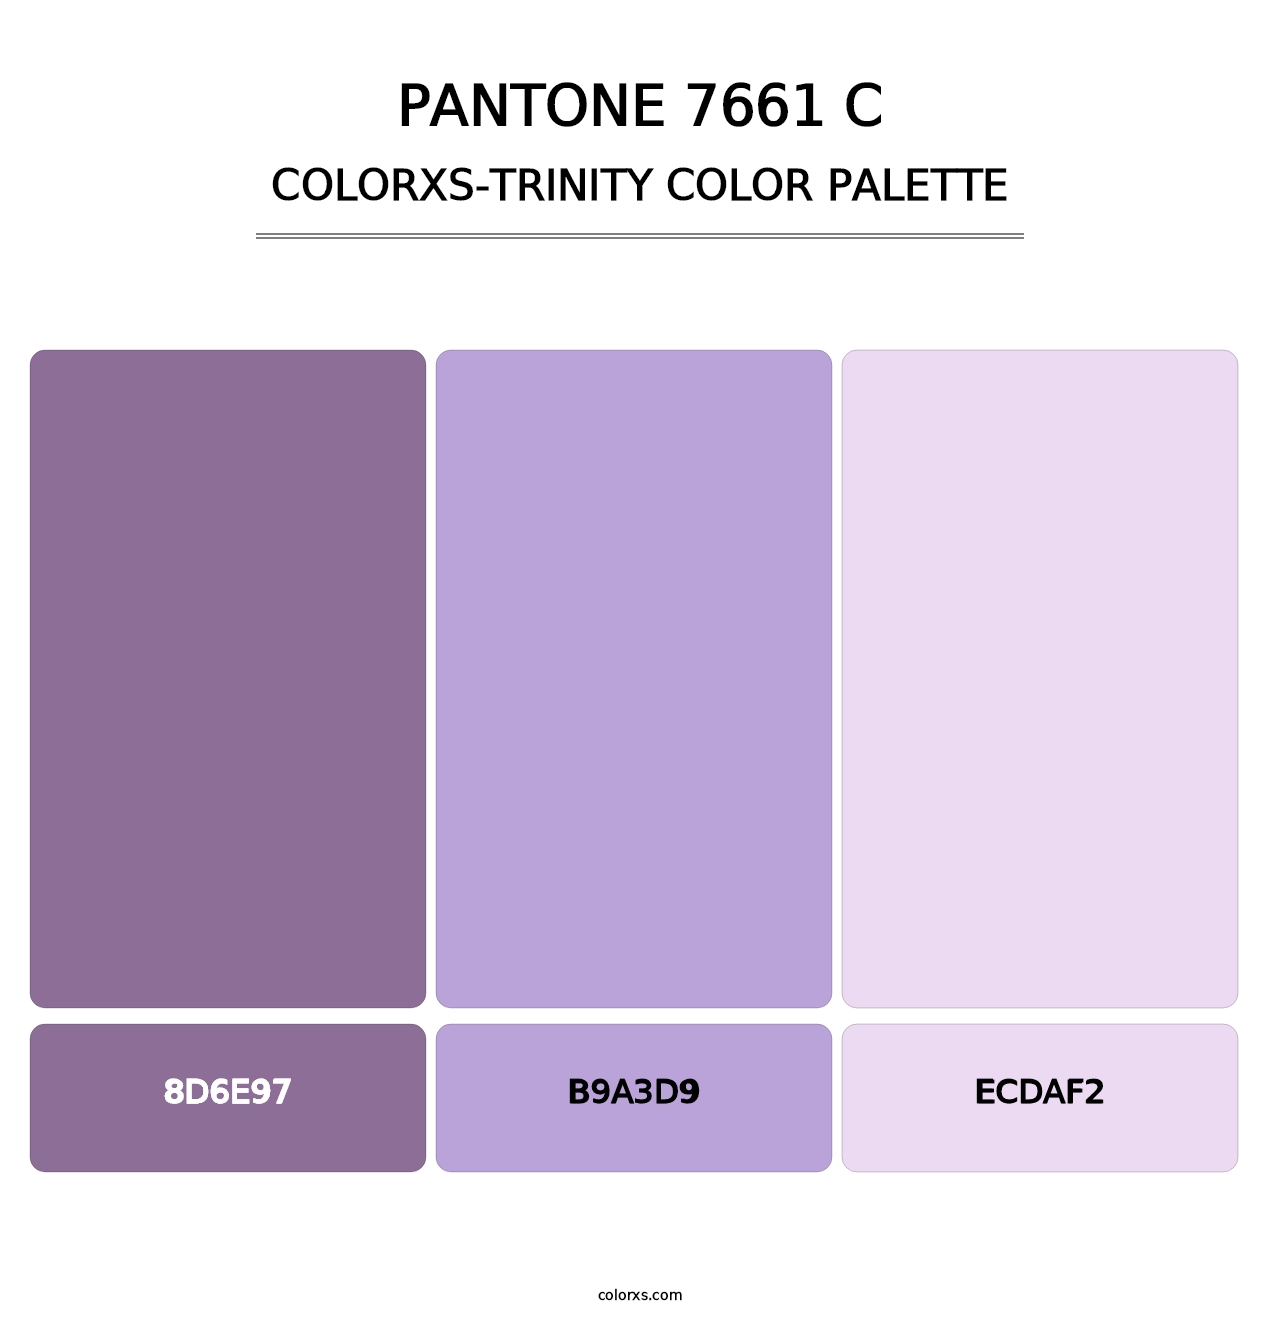 PANTONE 7661 C - Colorxs Trinity Palette